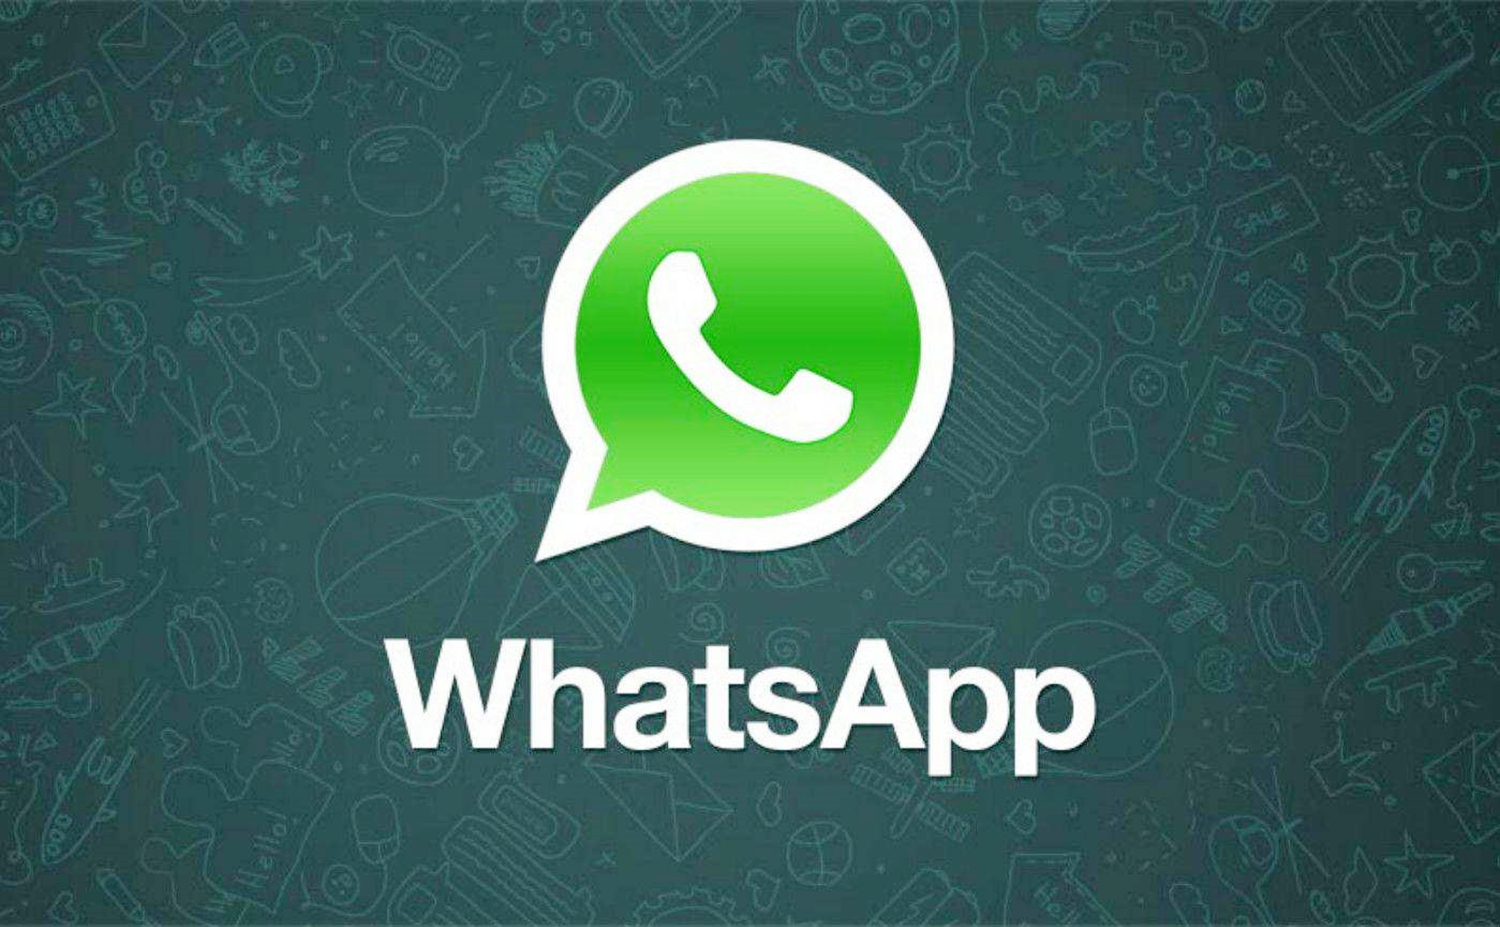 WhatsApp age determination software based on avatar